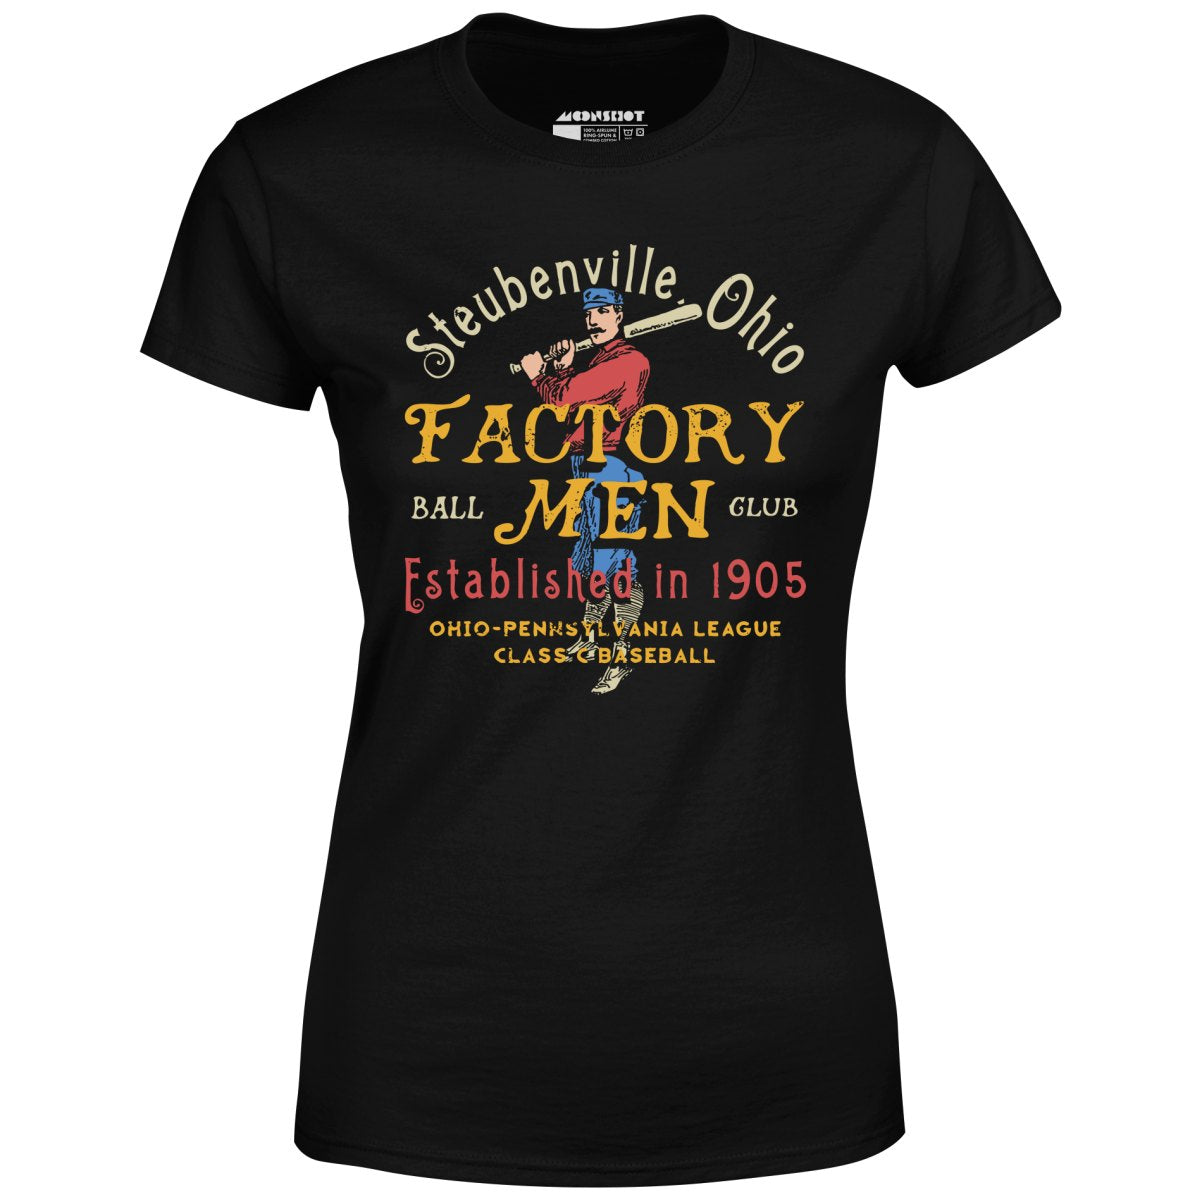 Steubenville Factory Men - Ohio - Vintage Defunct Baseball Teams - Women's T-Shirt